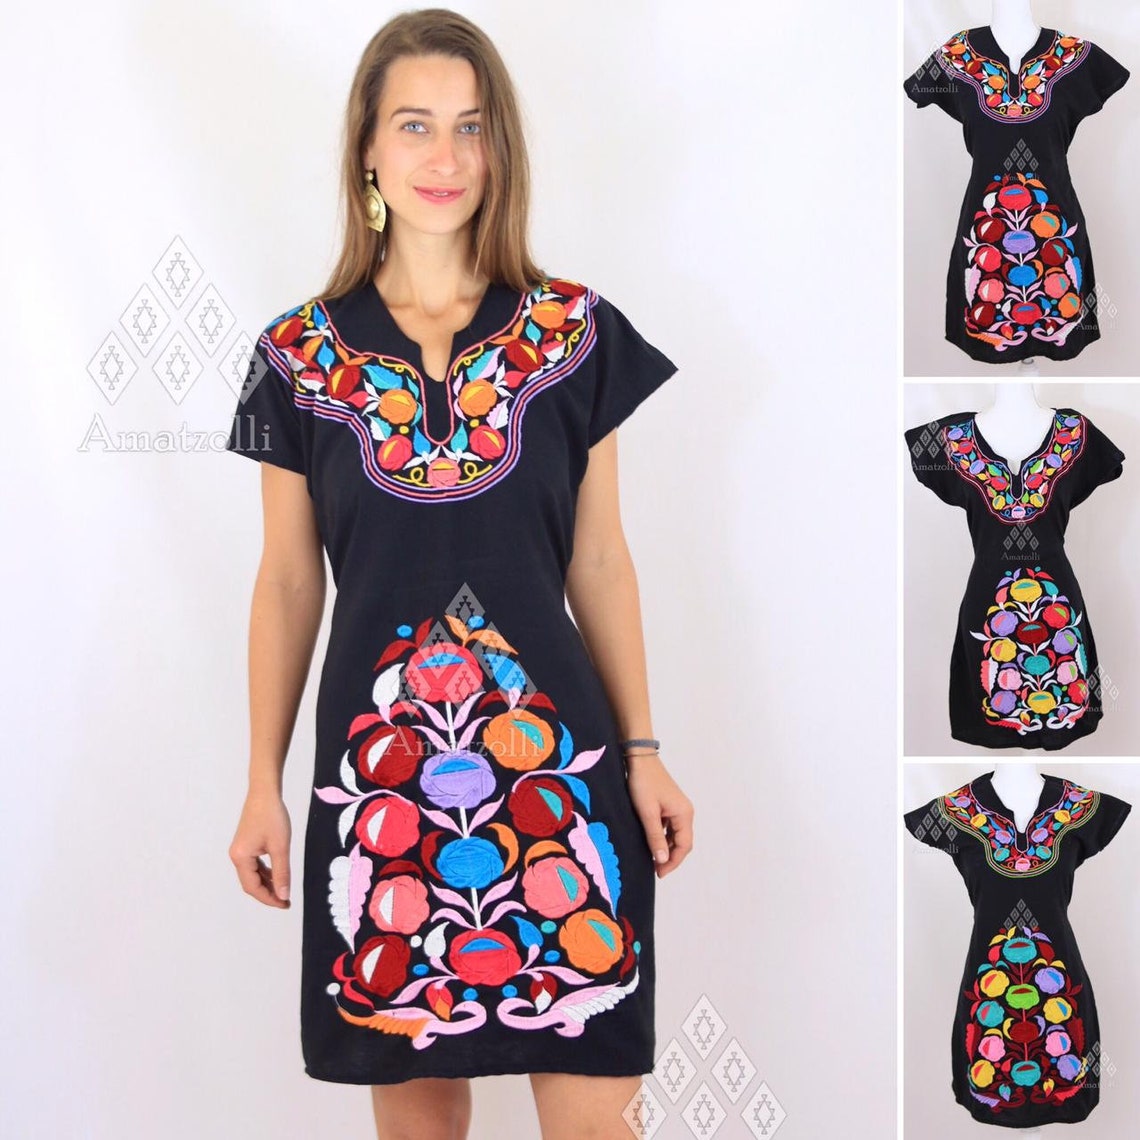 Typical Mexican Dress Mod. Micaela | Etsy